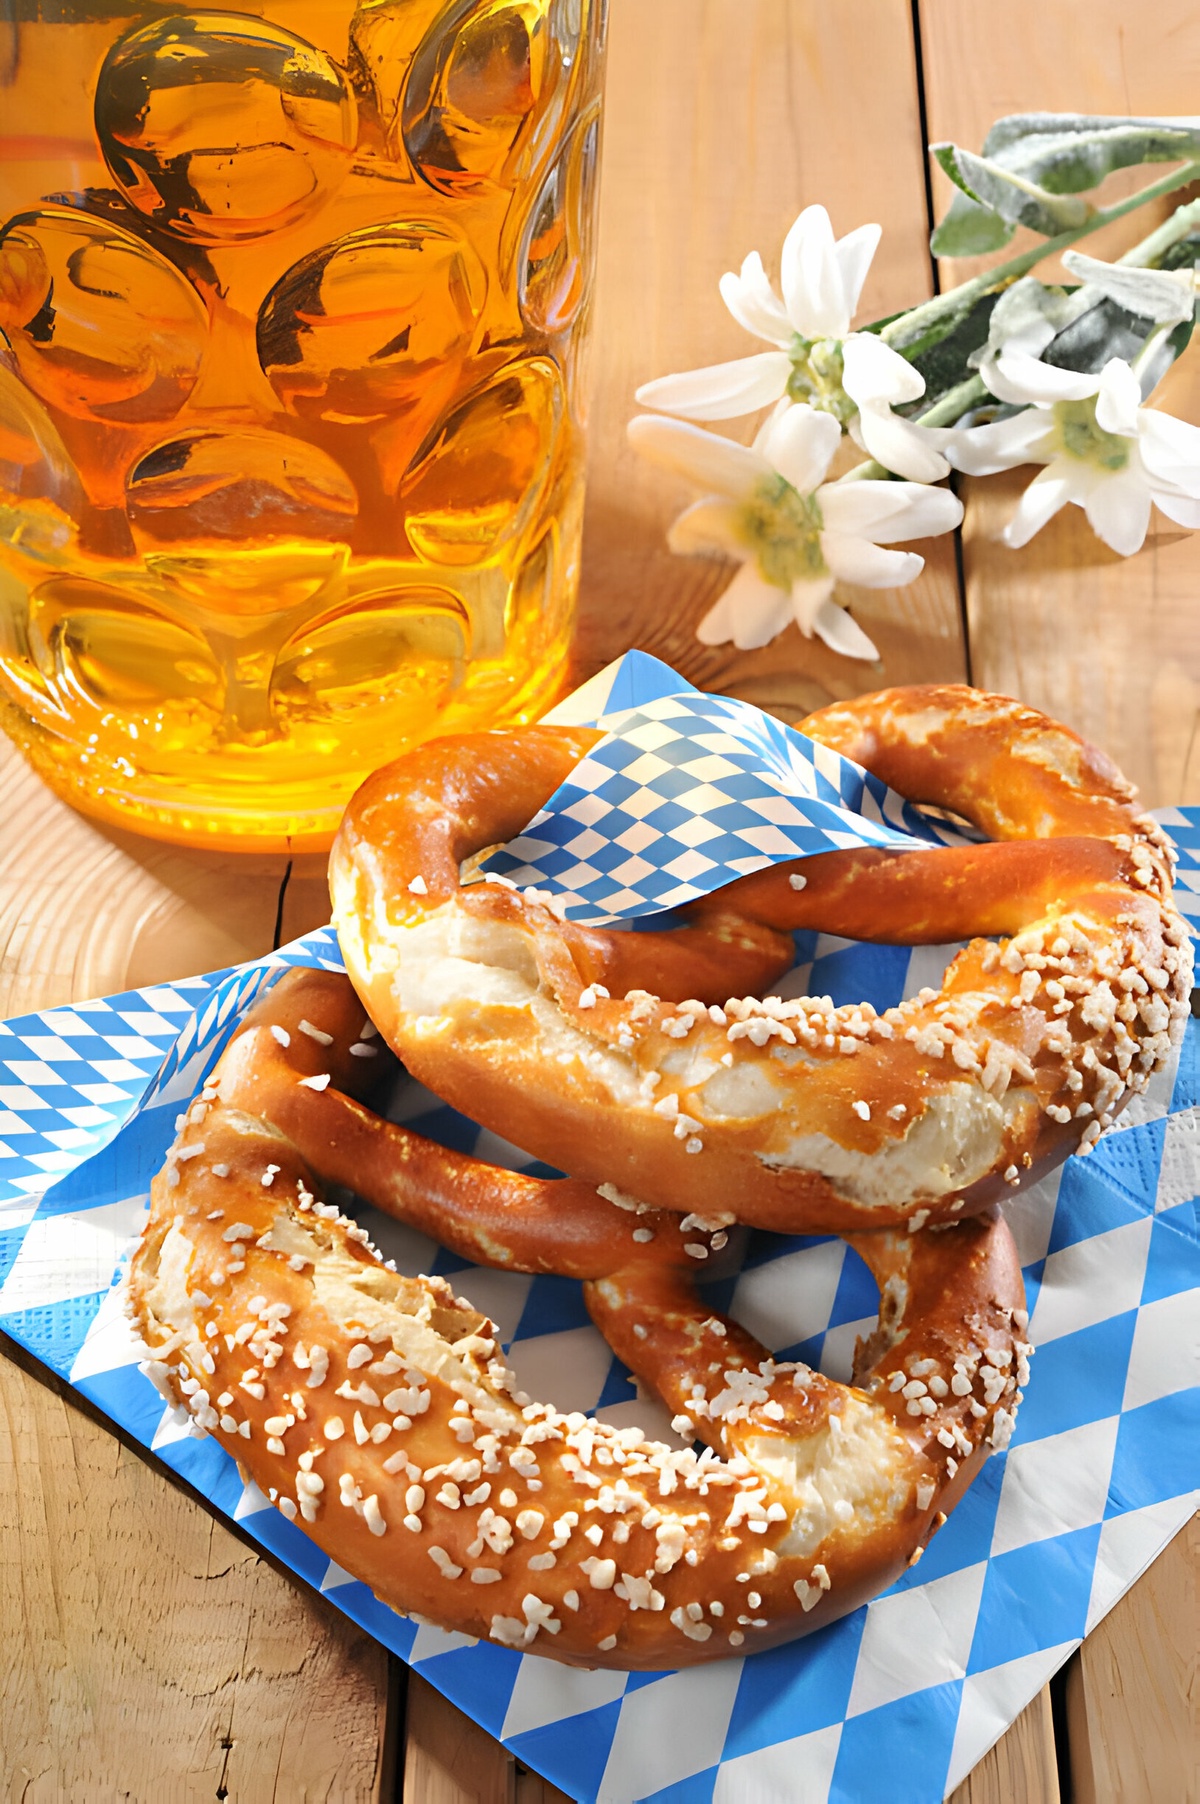 Twisting Tradition: The Irresistible Charm of Bavarian Pretzels at Oktoberfest